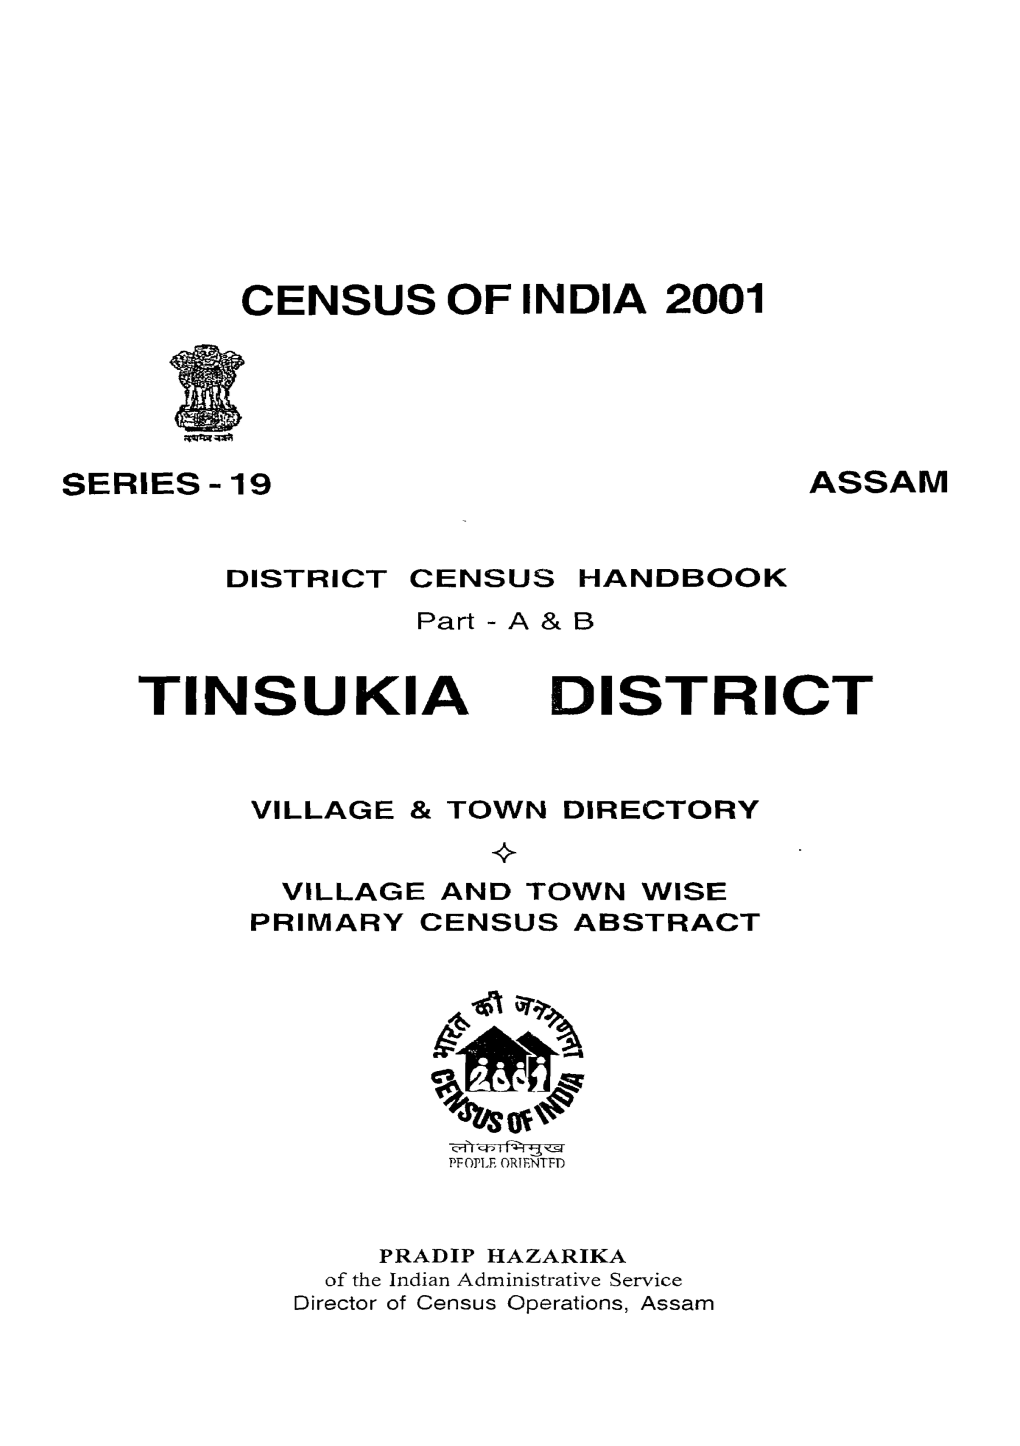 District Census Handbook, Part XII-A & B, Tinsukia District, Series-19